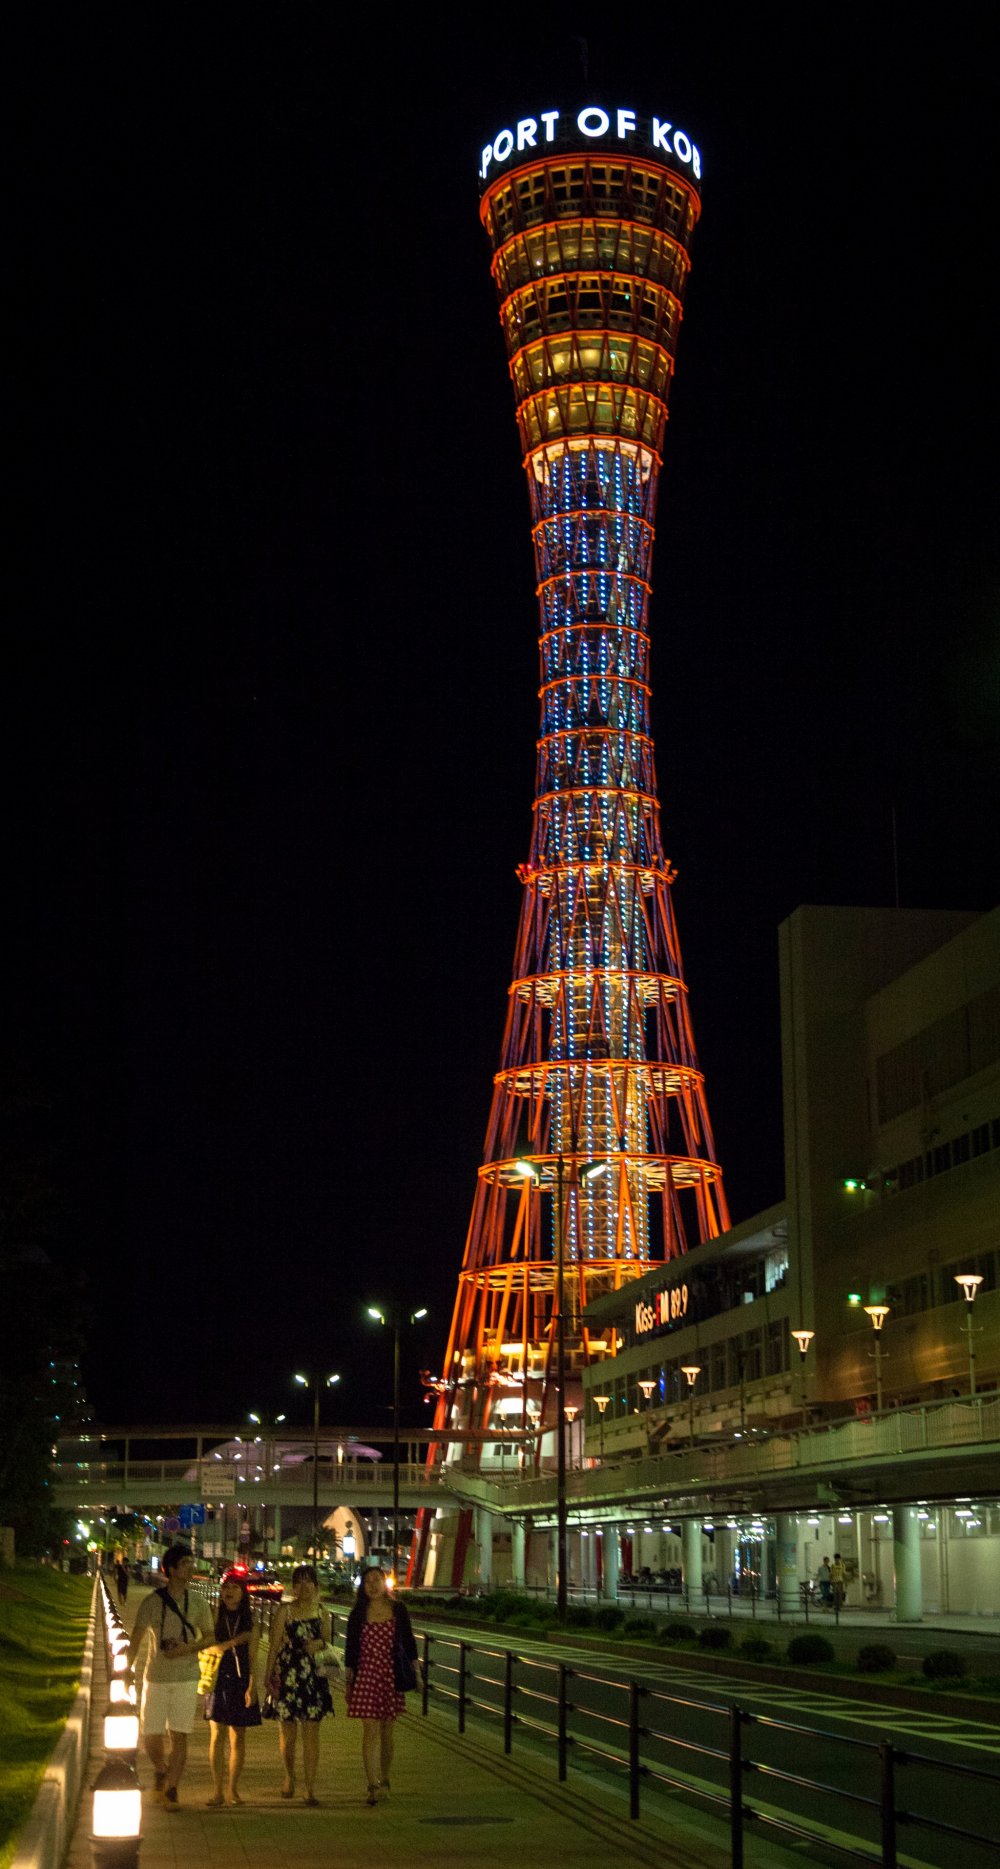 La Kobe Port Tower illumin&eacute;e &agrave; la nuit tomb&eacute;e
